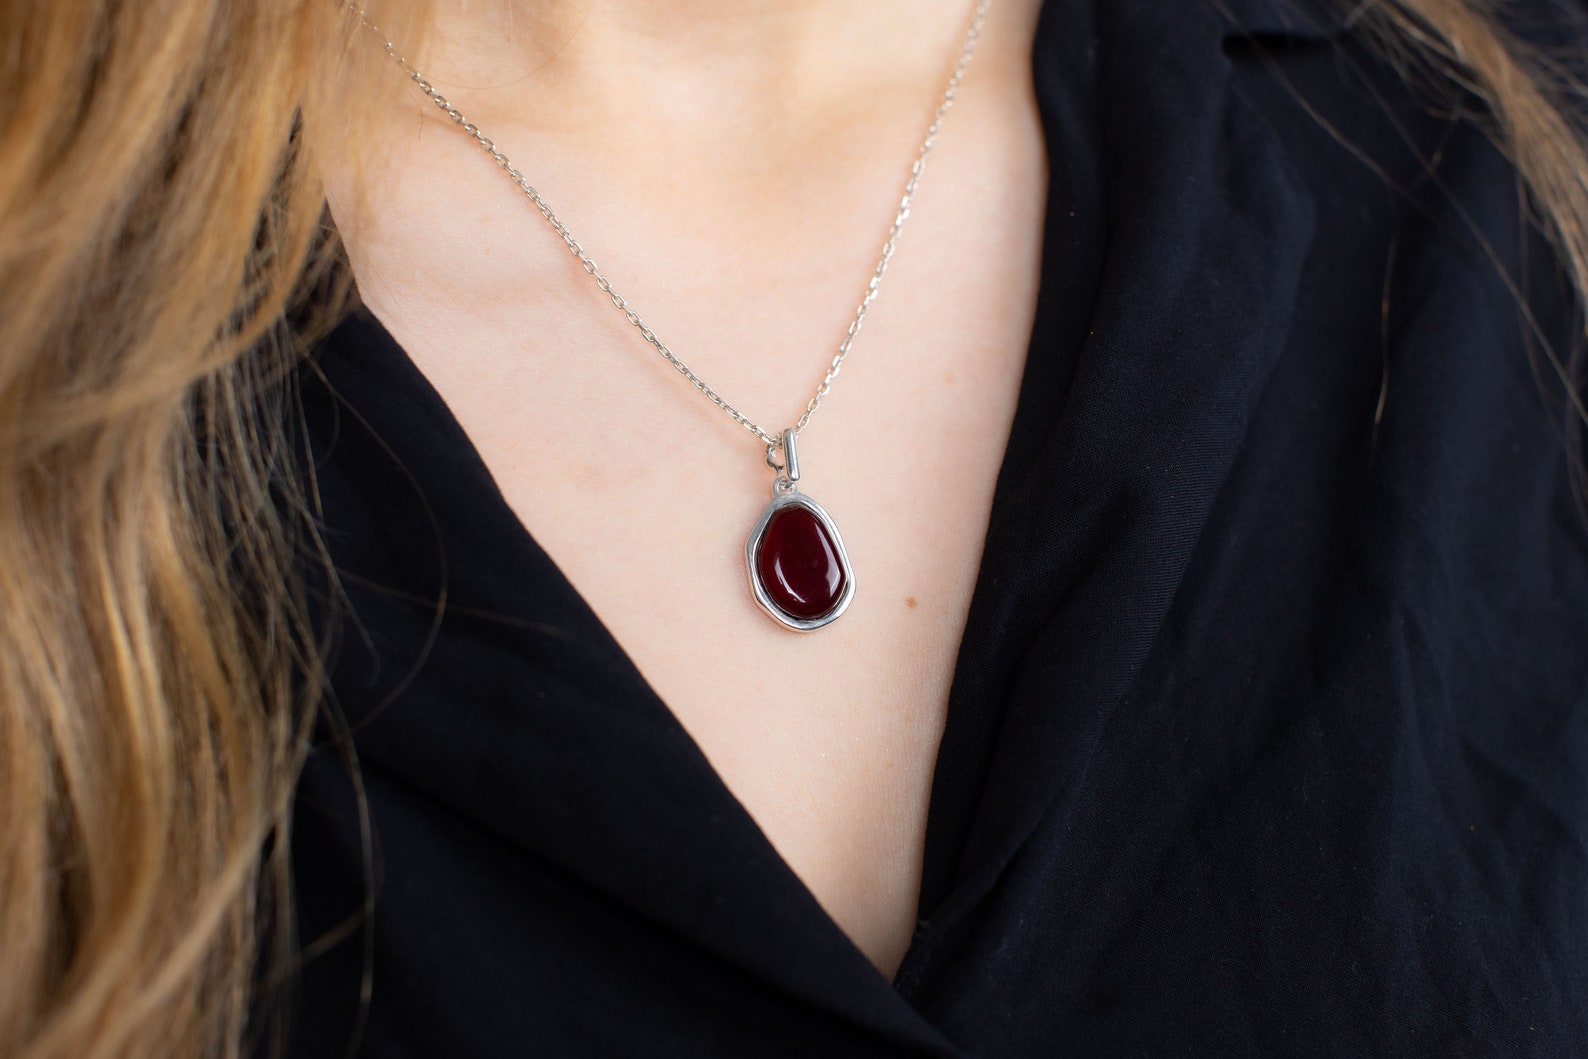 Cherry Amber ELEMENT Pendant Necklace- Necklaces- Baltic Beauty